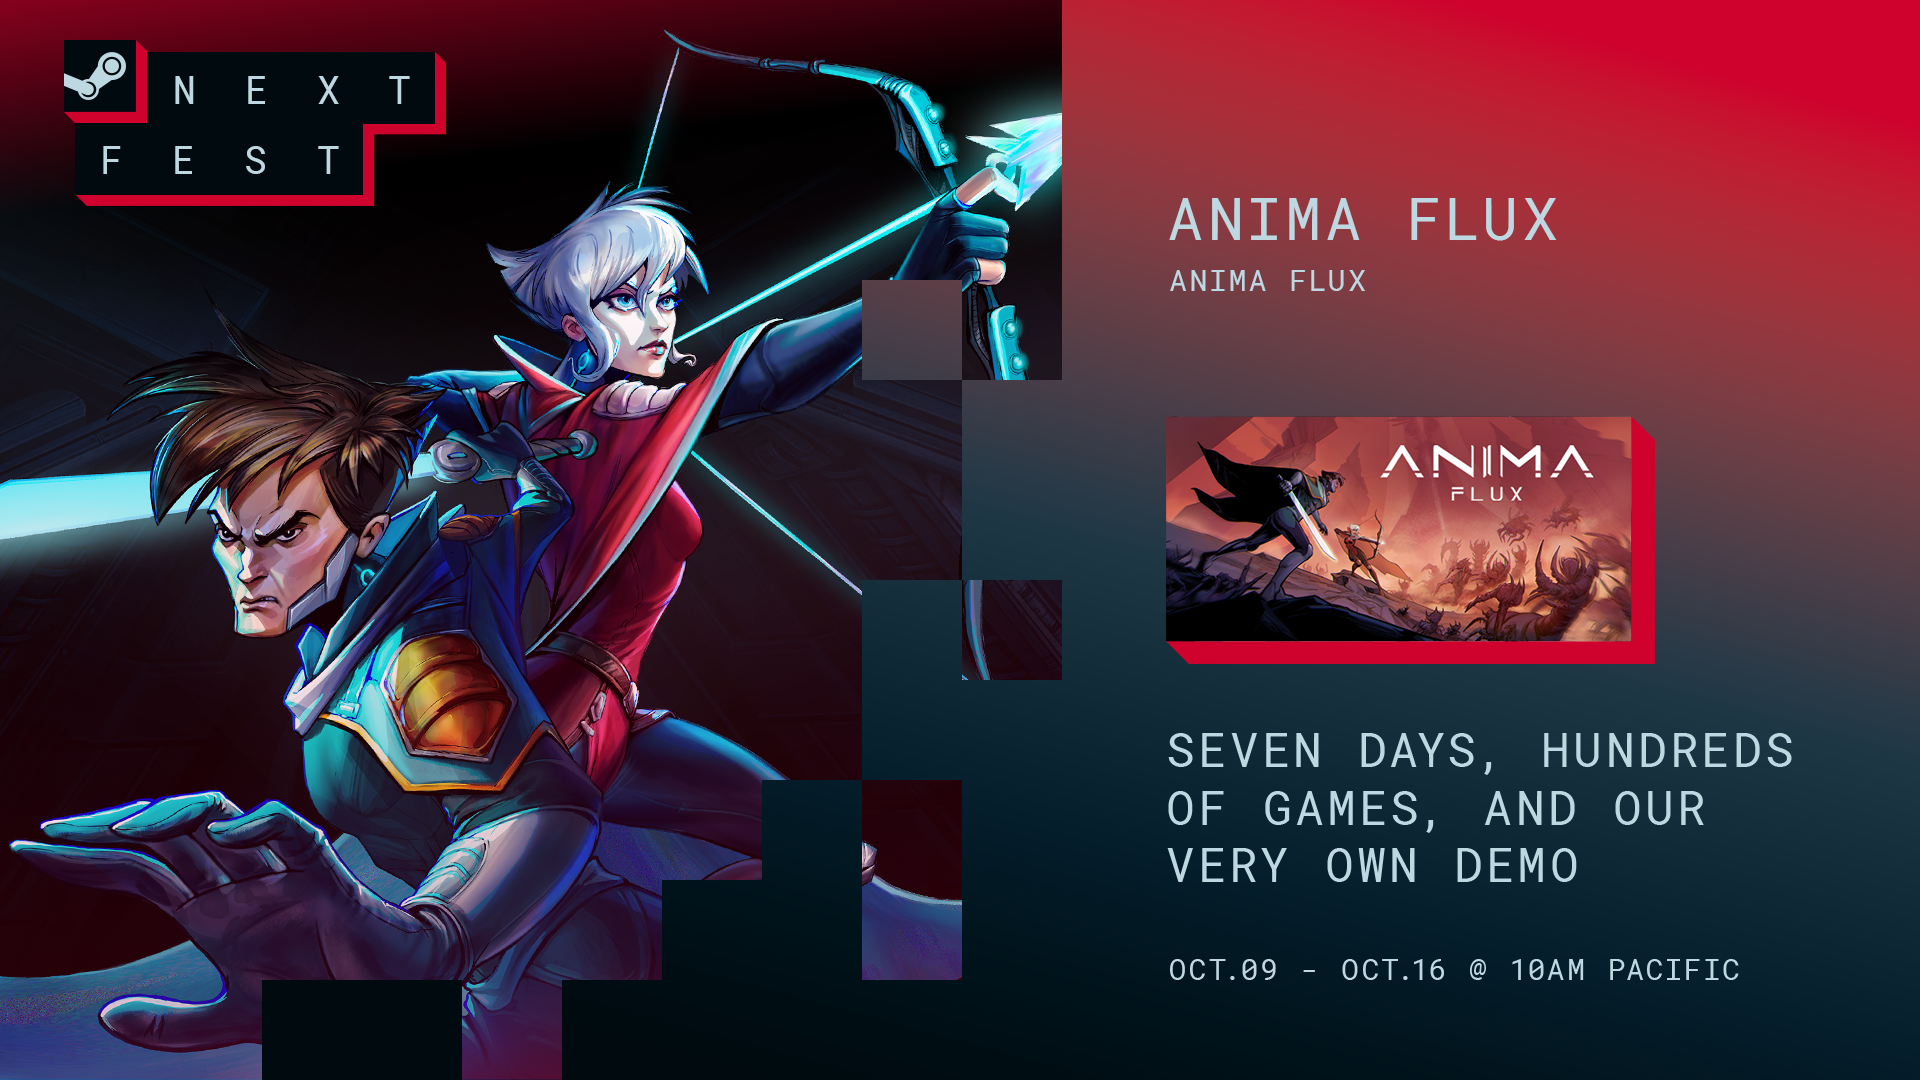 Co op game Anima Flux on Steam Next Fest!